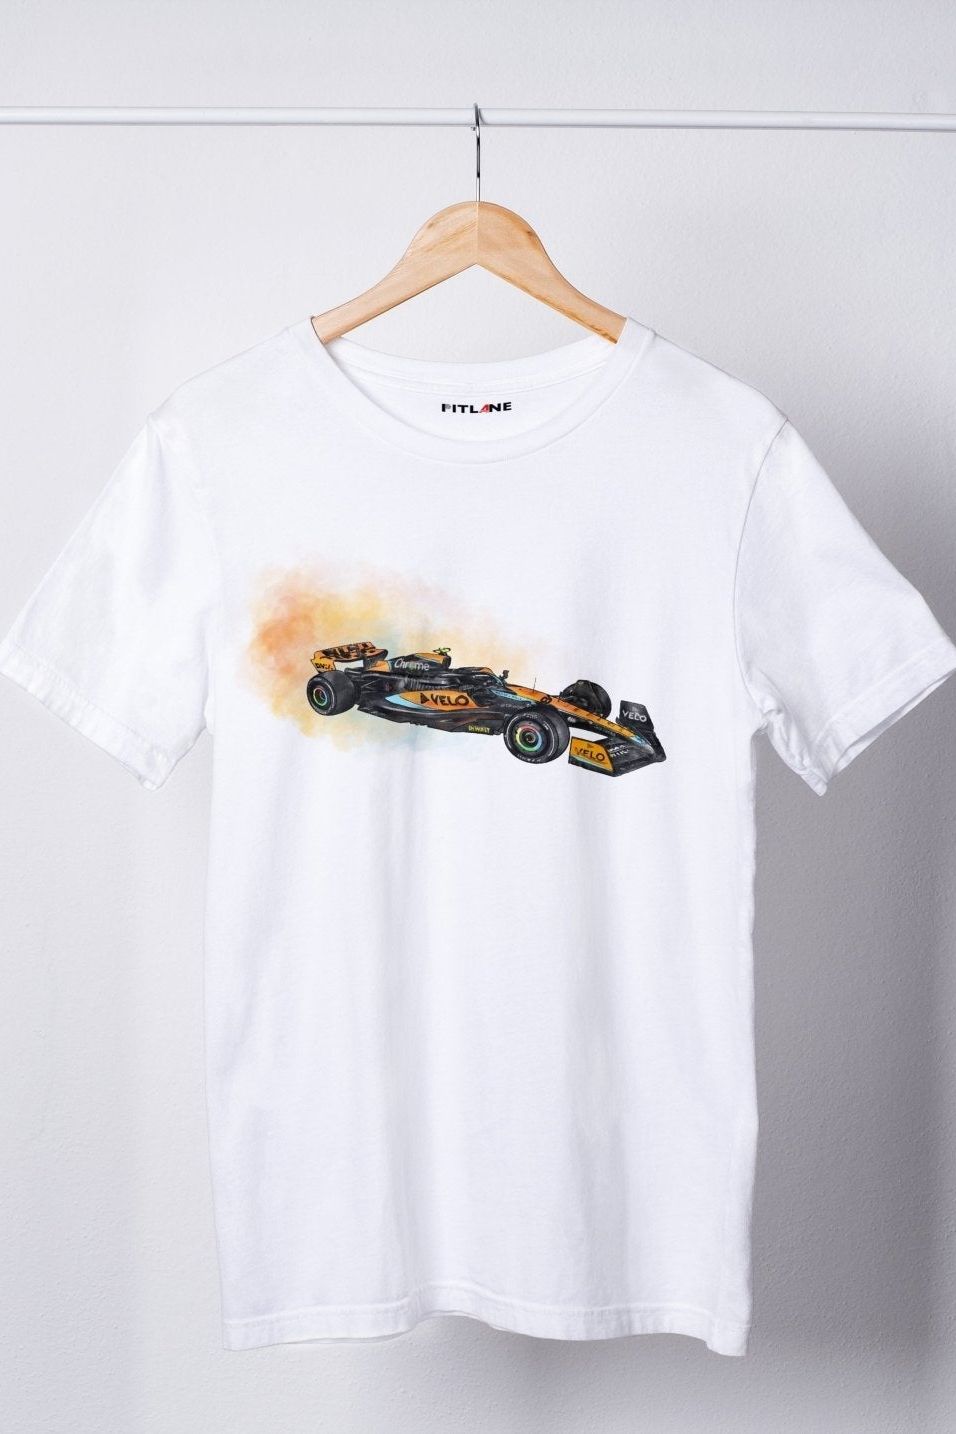 Unofficial McLaren F1 Team merchandise